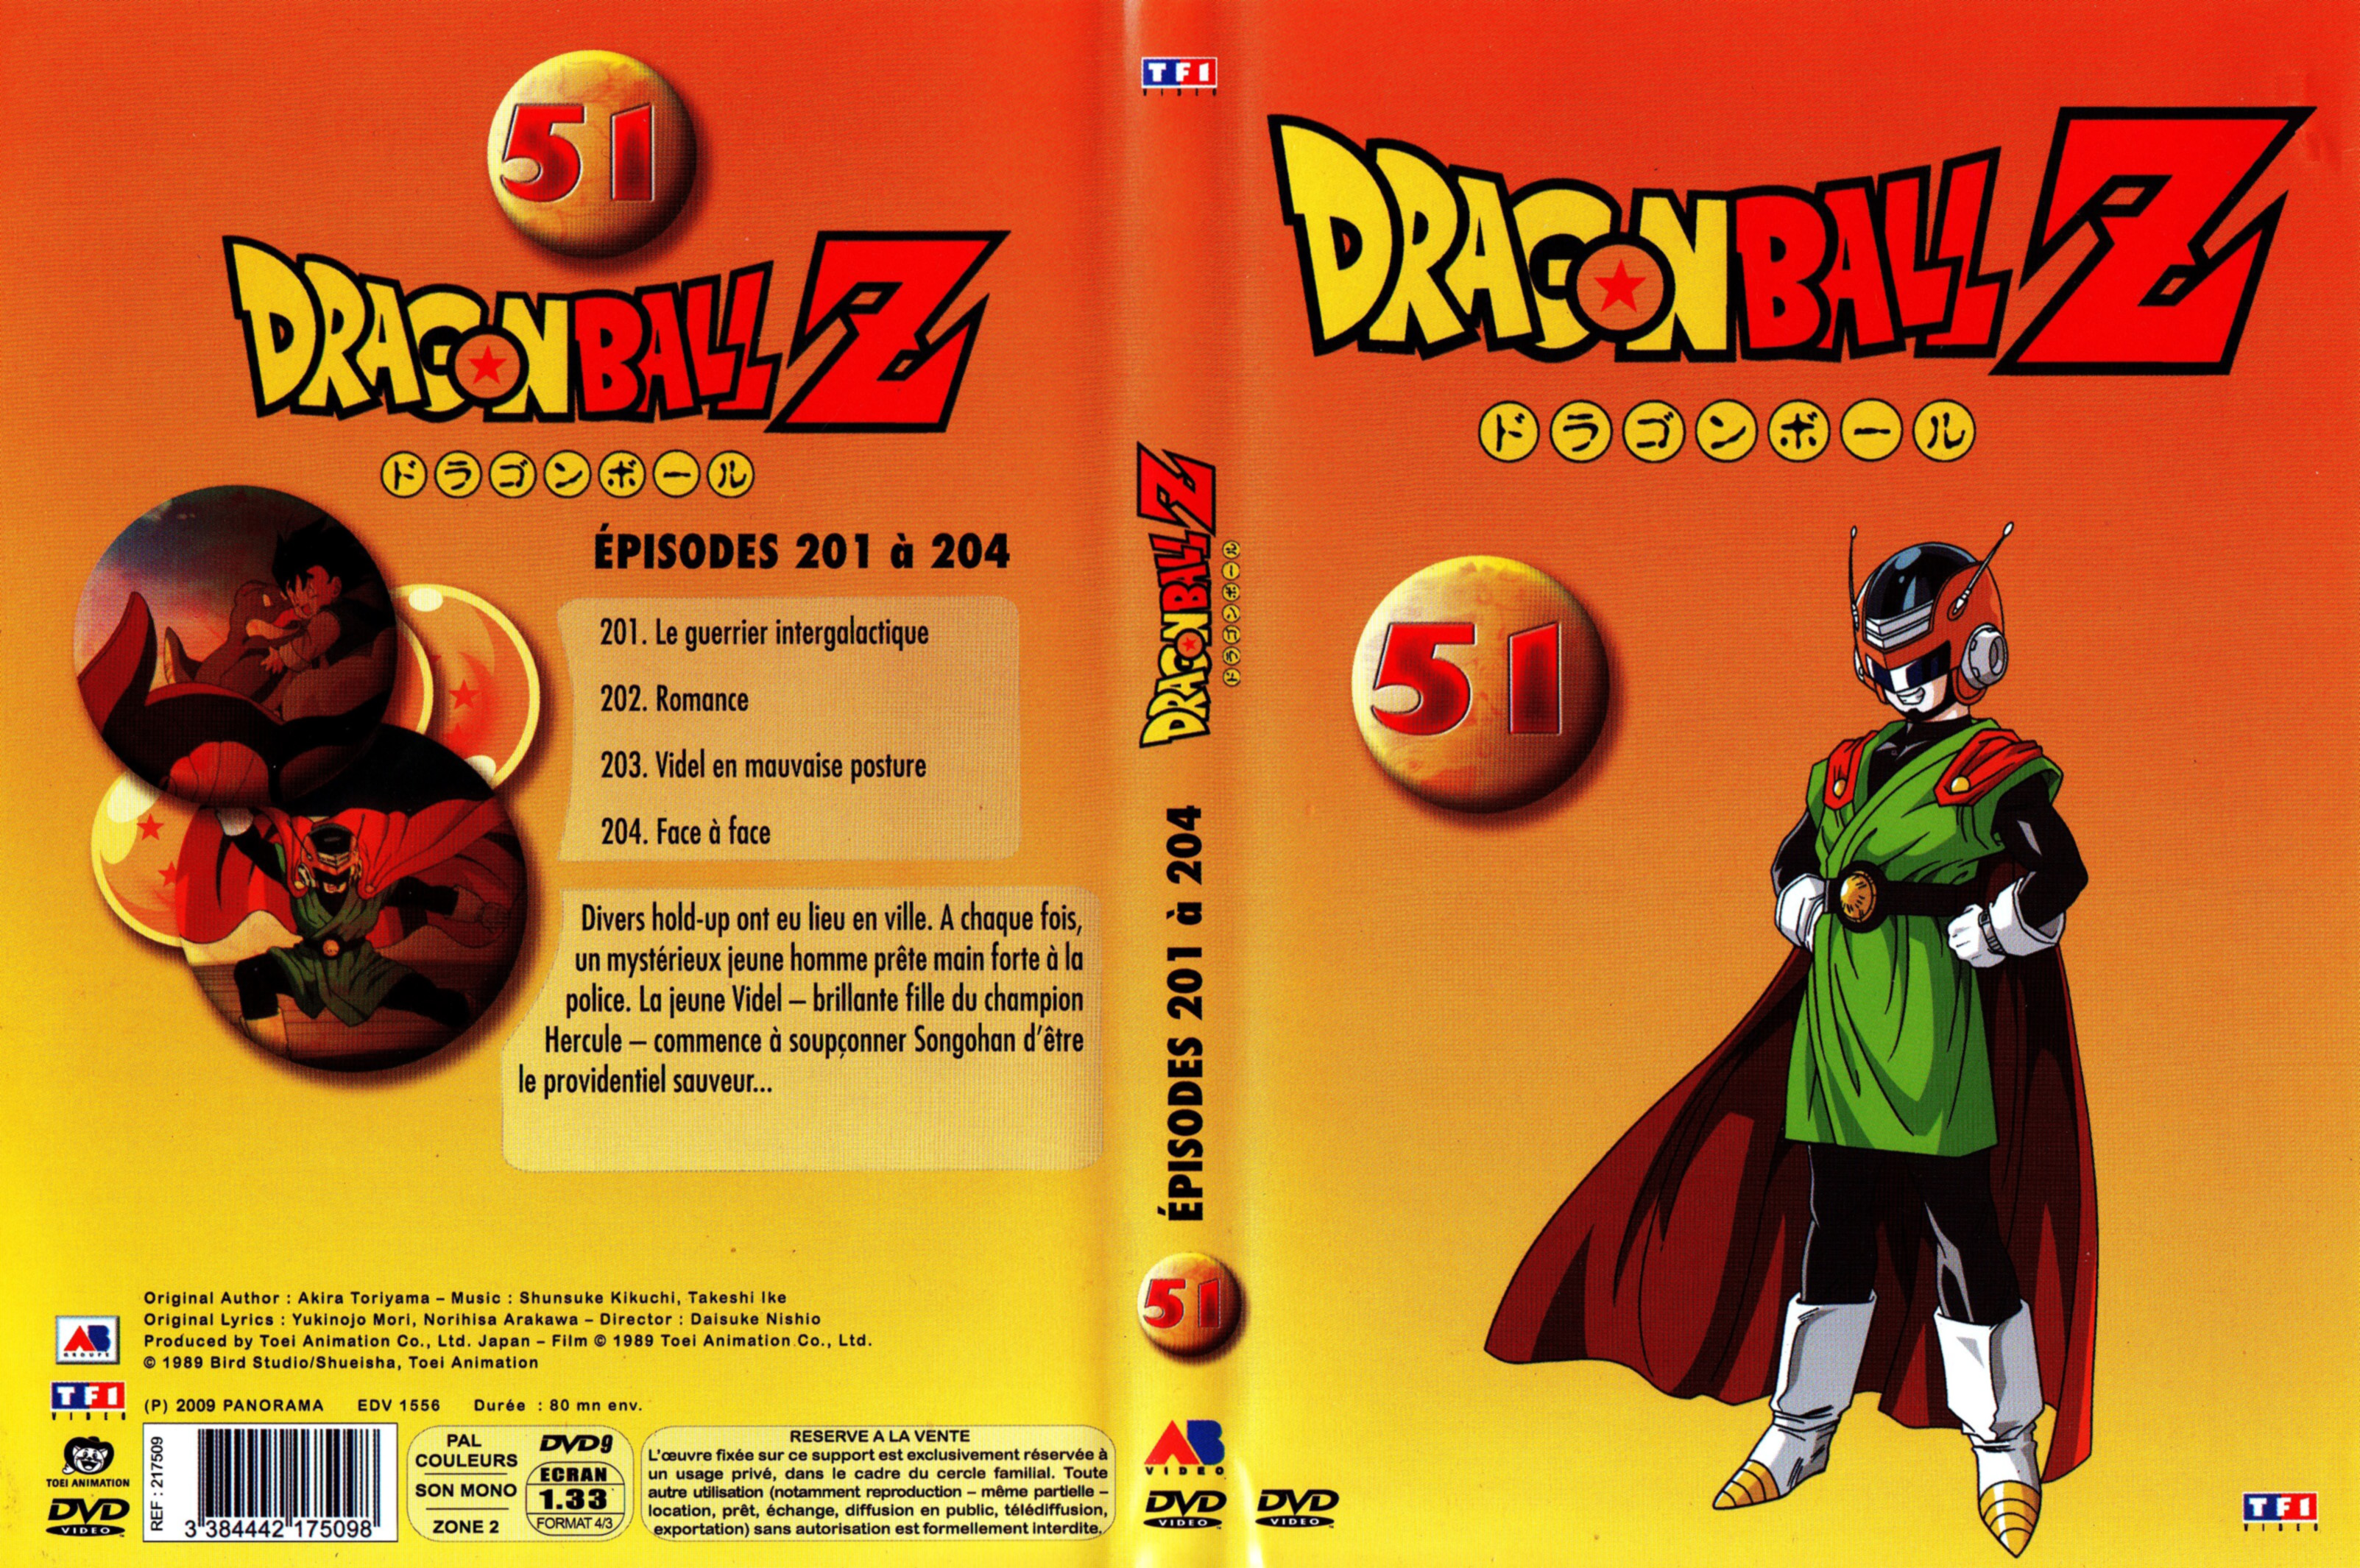 Jaquette DVD Dragon Ball Z vol 51